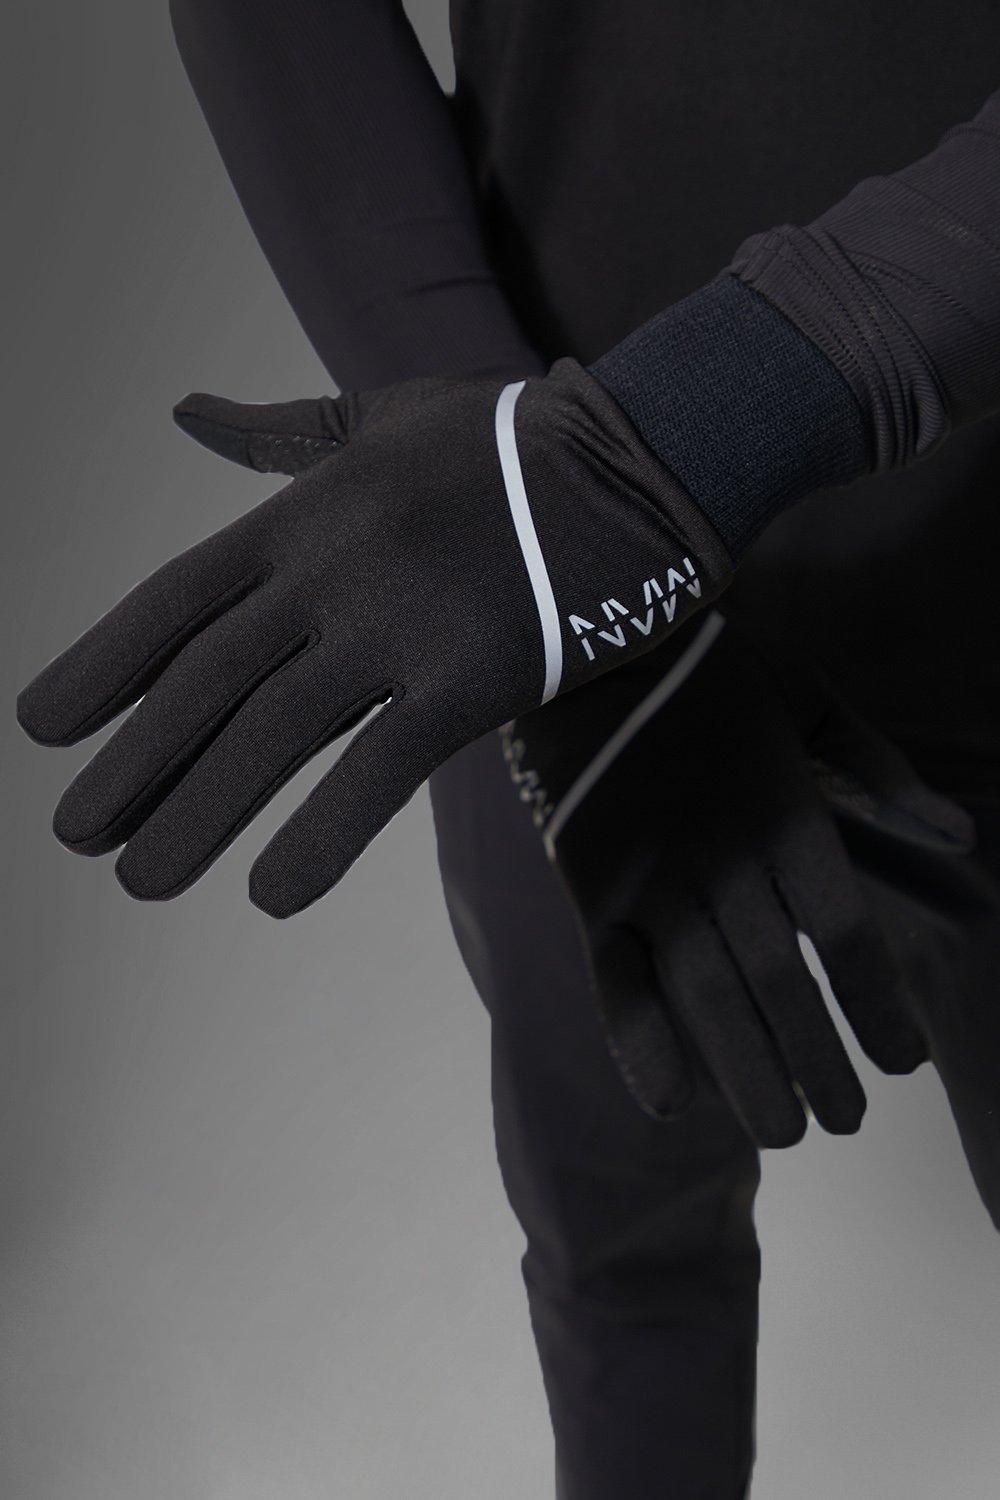 Boohoo Man Active Performance Gloves- Black  - Size: S/M